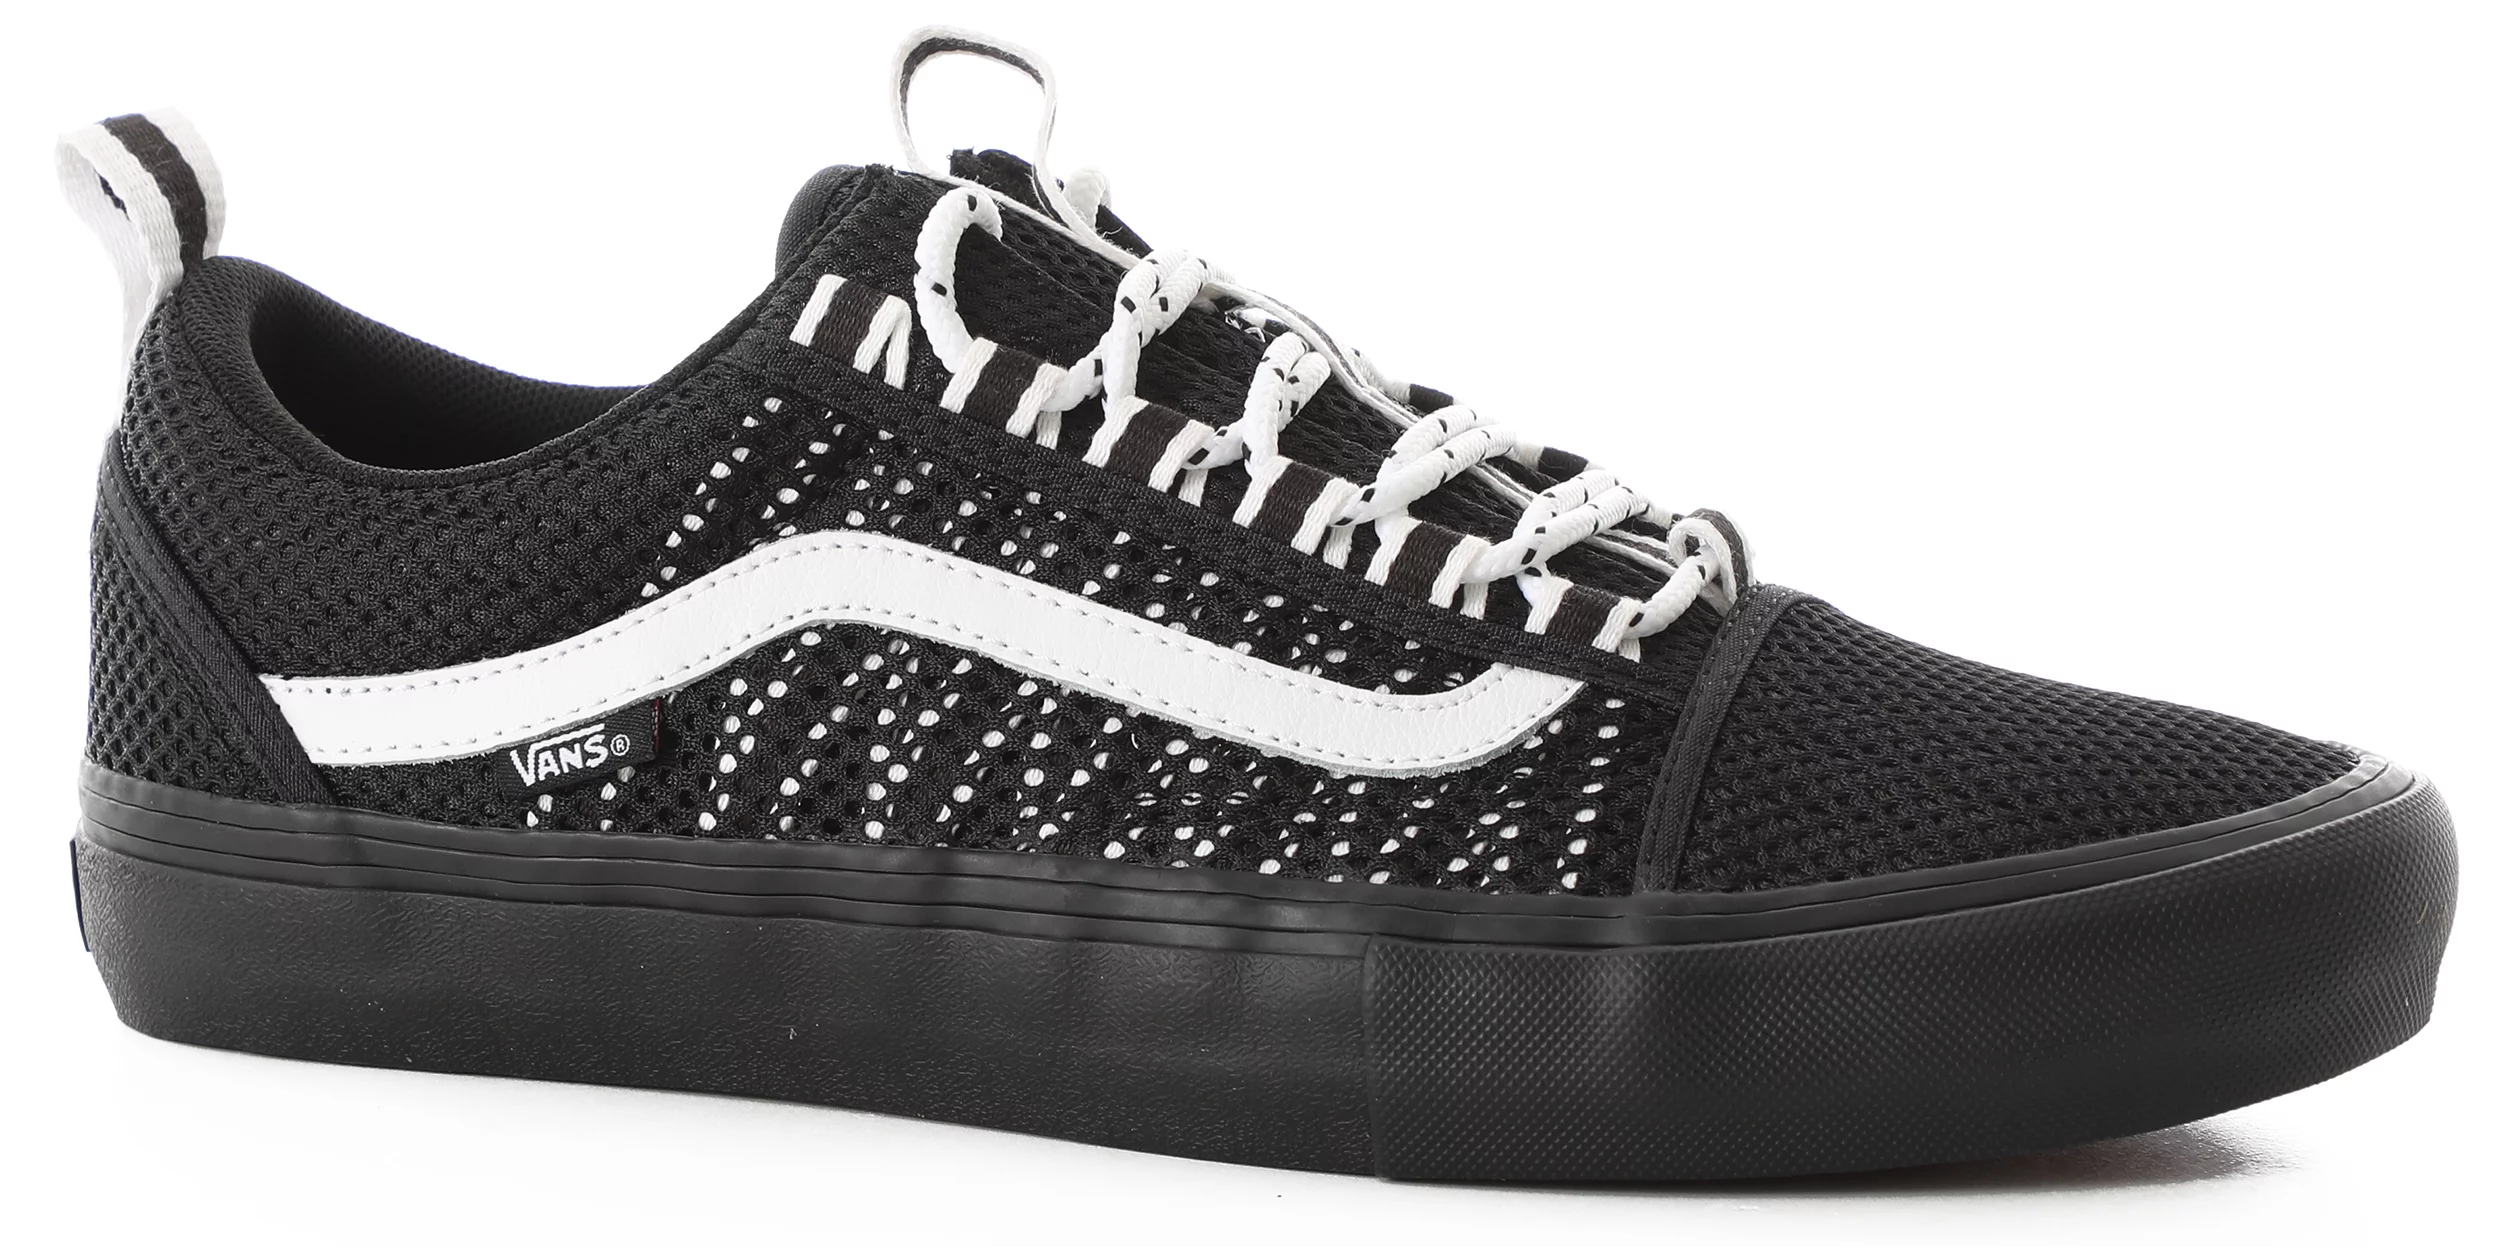 Laster Brandweerman Geef rechten Vans Old Skool Pro Sport Skate Shoes - black/black/white | Tactics